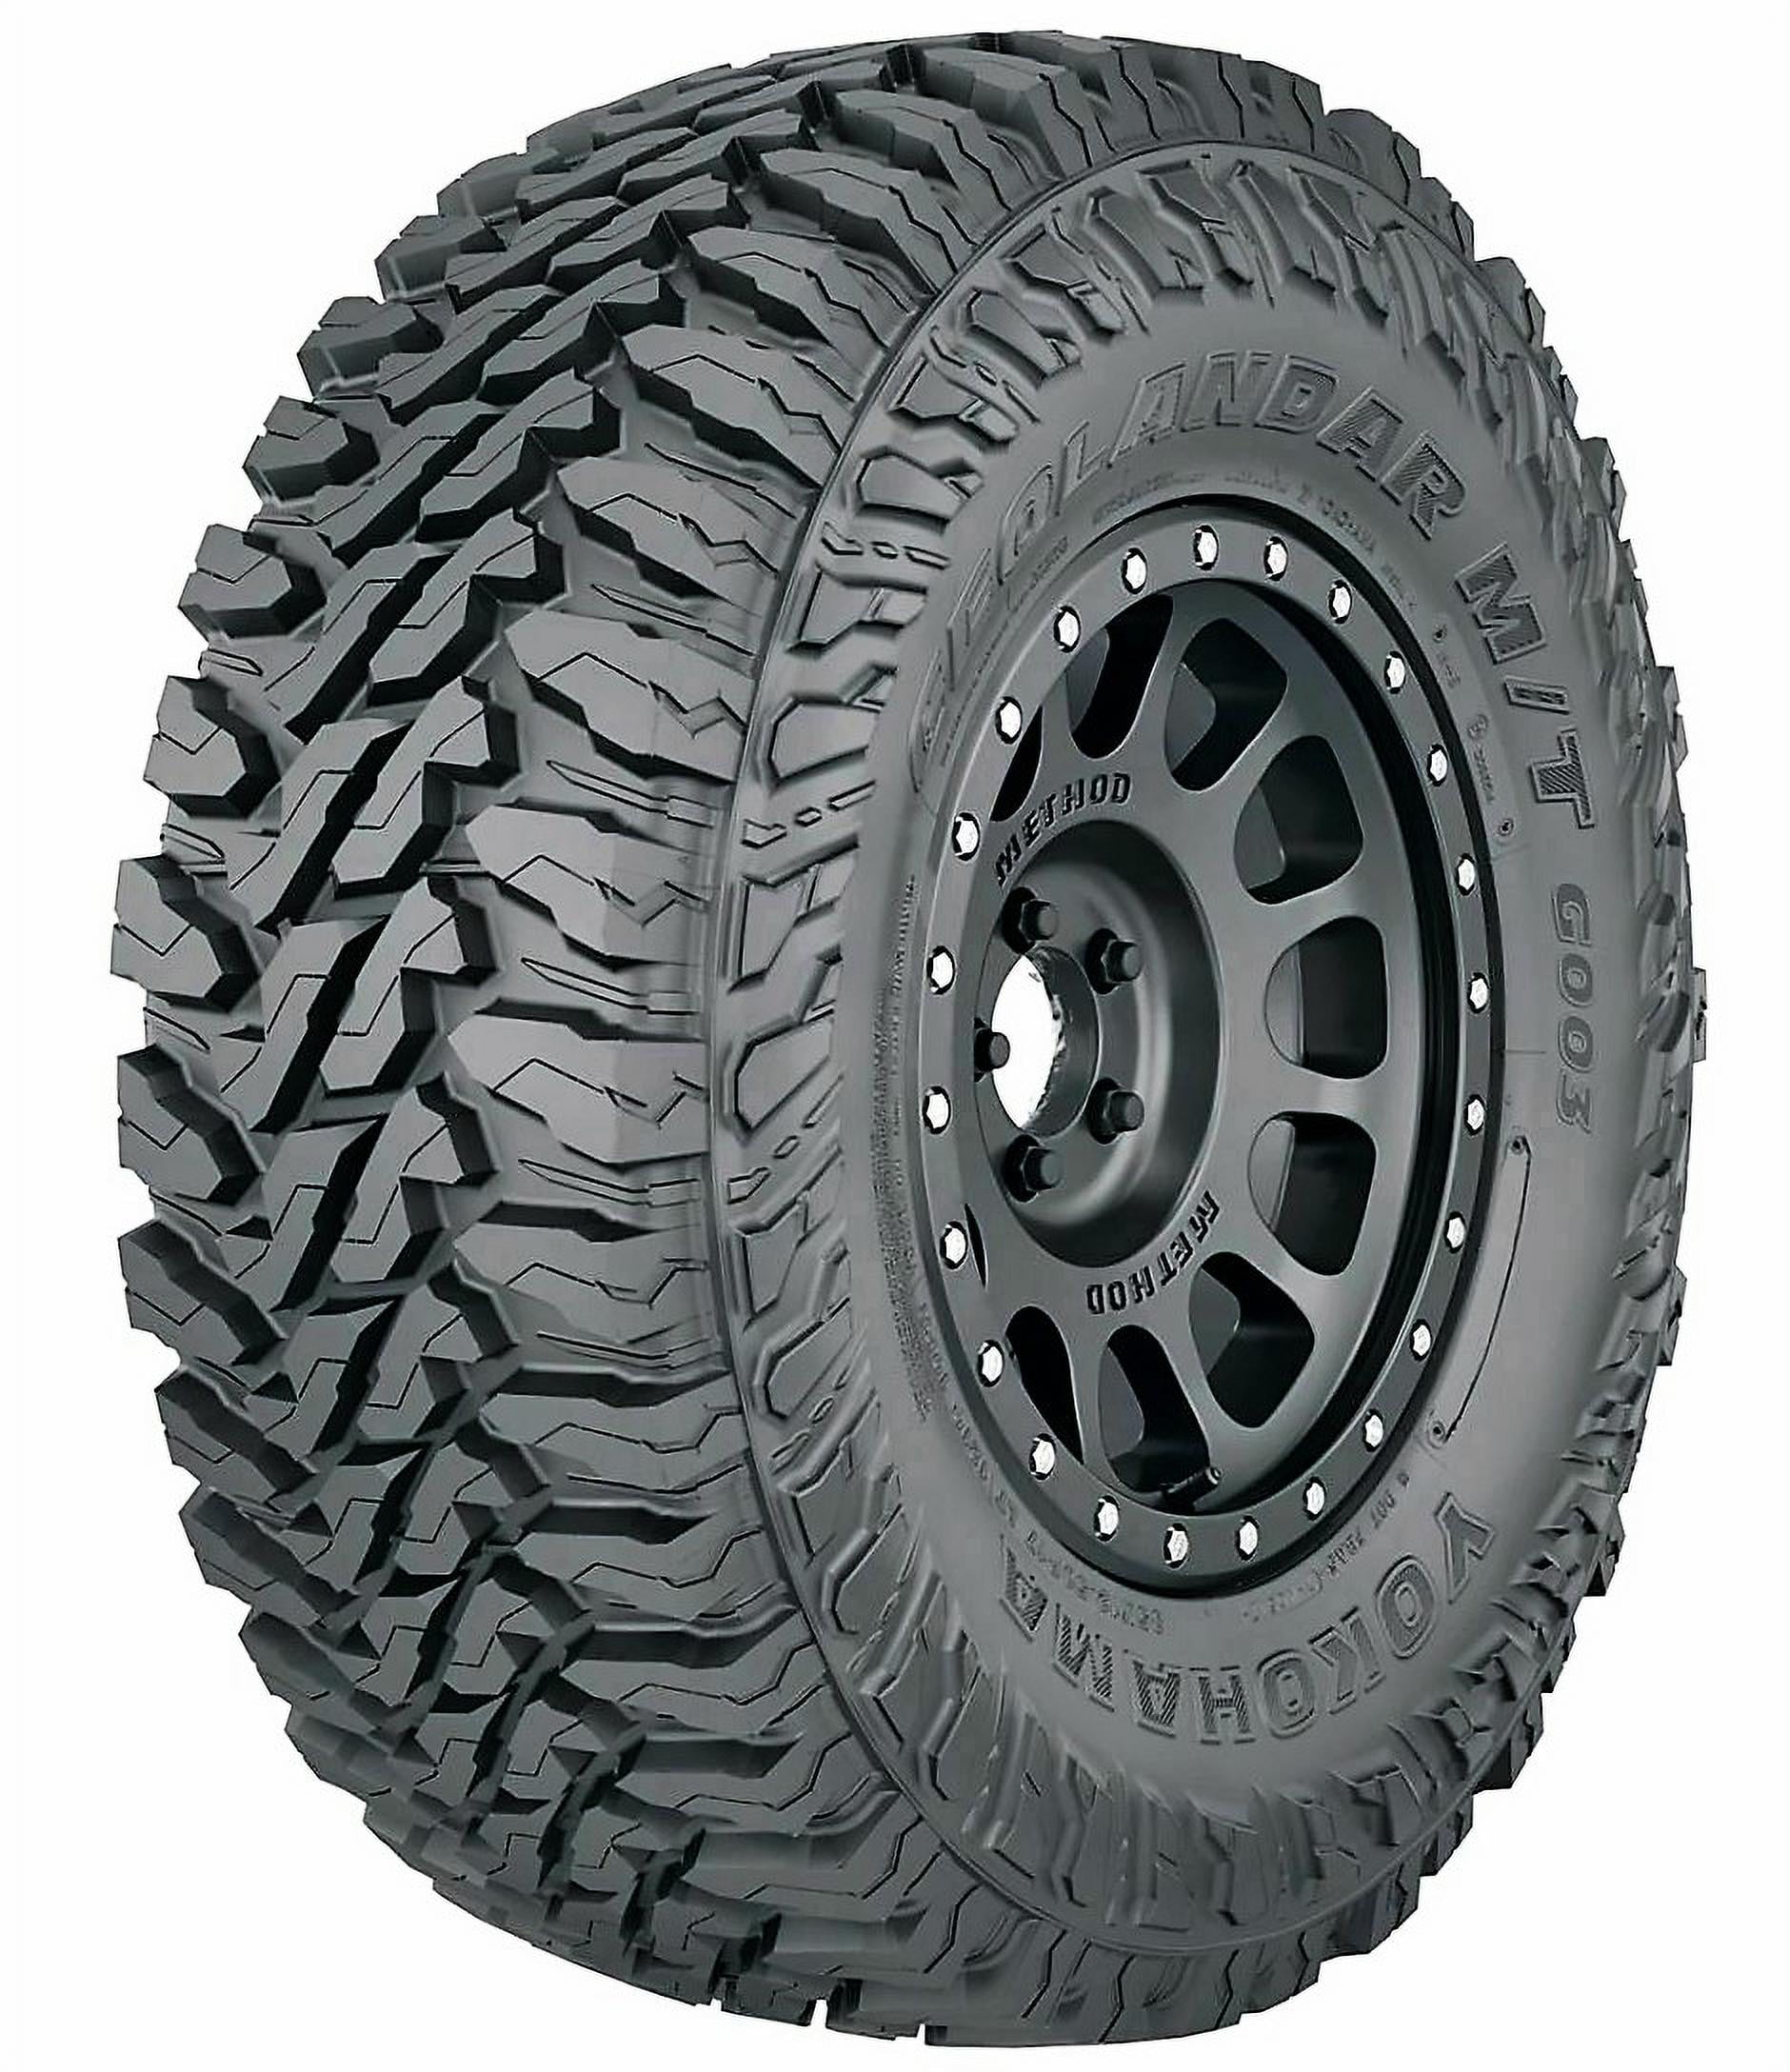 Buy Yokohama geolandar mt g003 LT27570R18 125Q bsw all-season tire